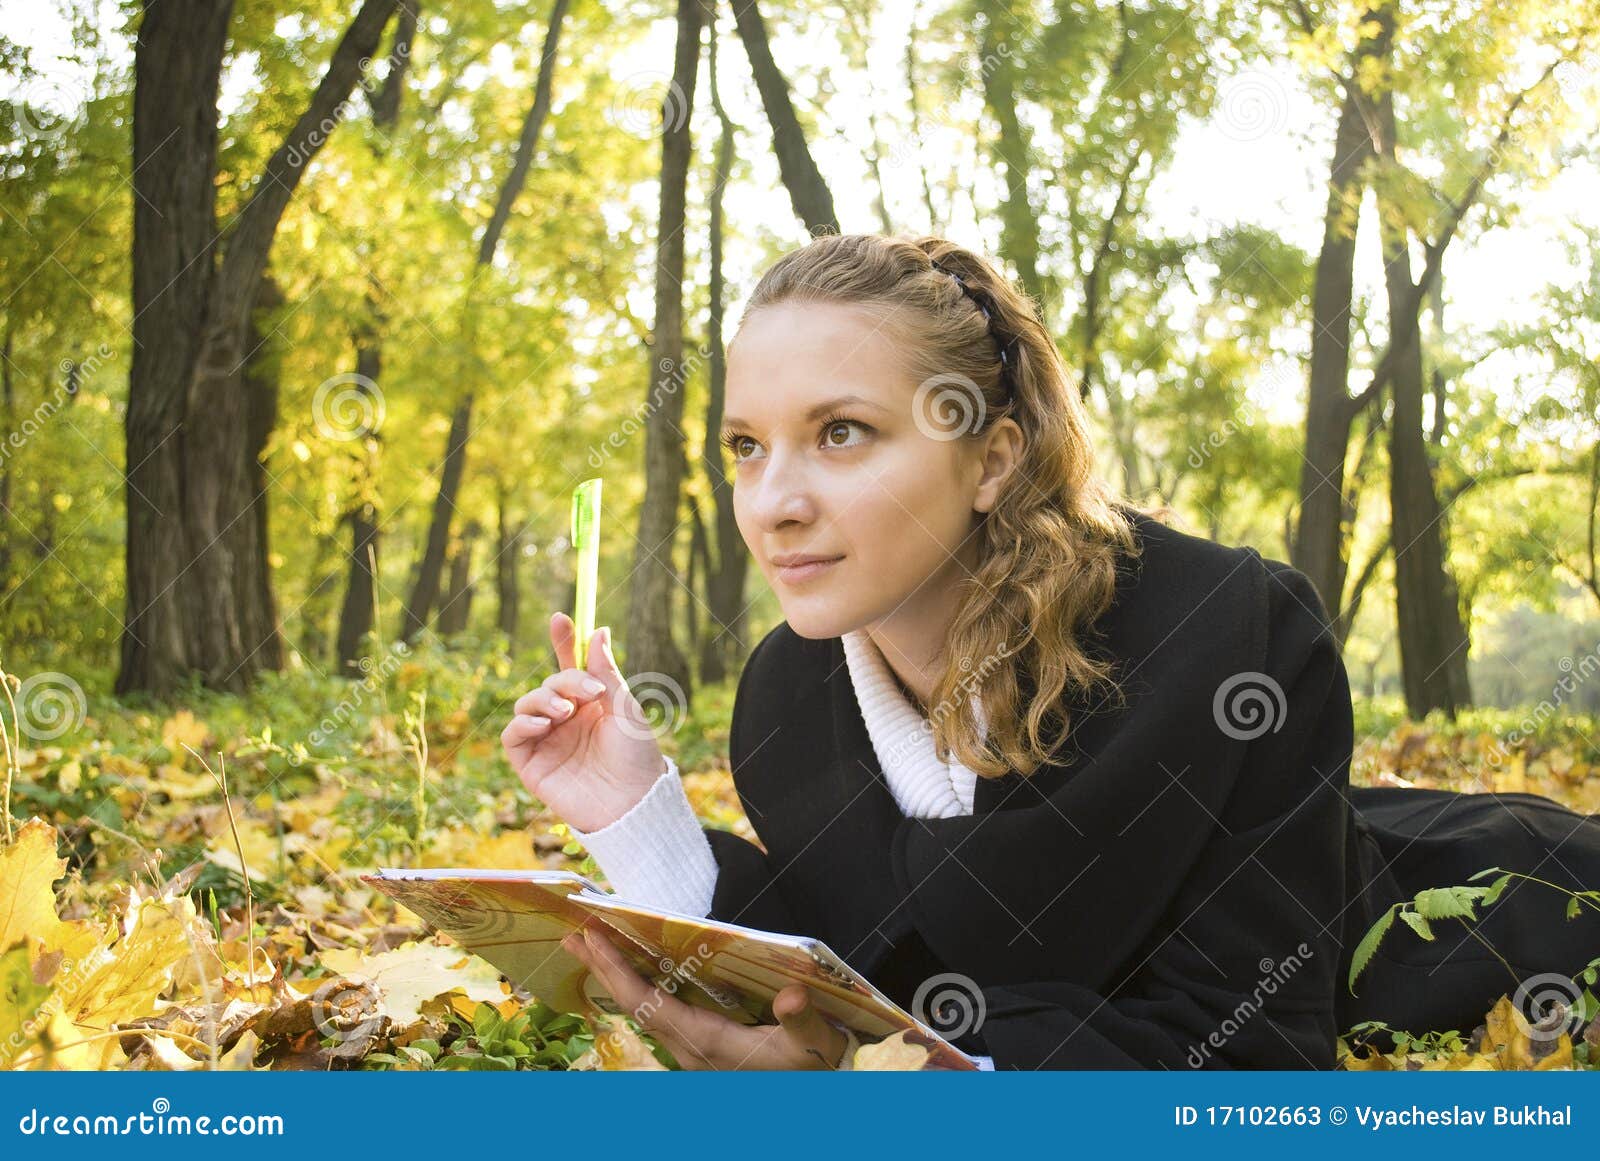 inspired teenager girl in autumn park